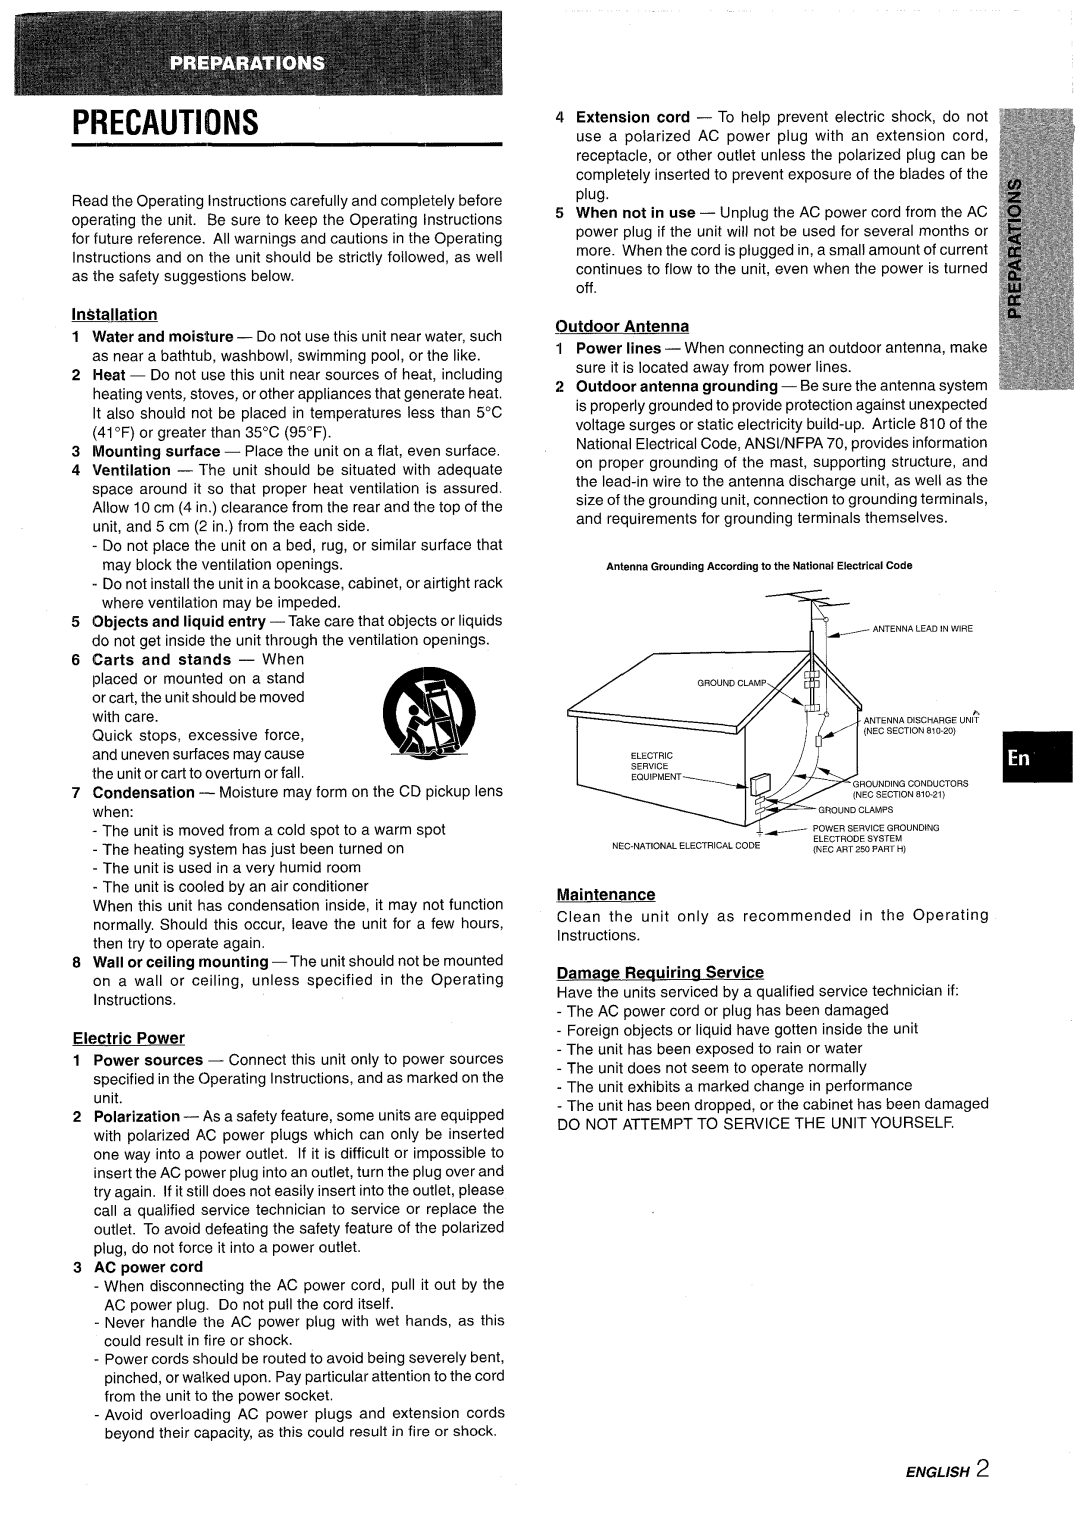 Aiwa NSX-AV800 manual Precautions, Installation, Electric Power, AC power cord, Outdoor Antenna, Maintenance 